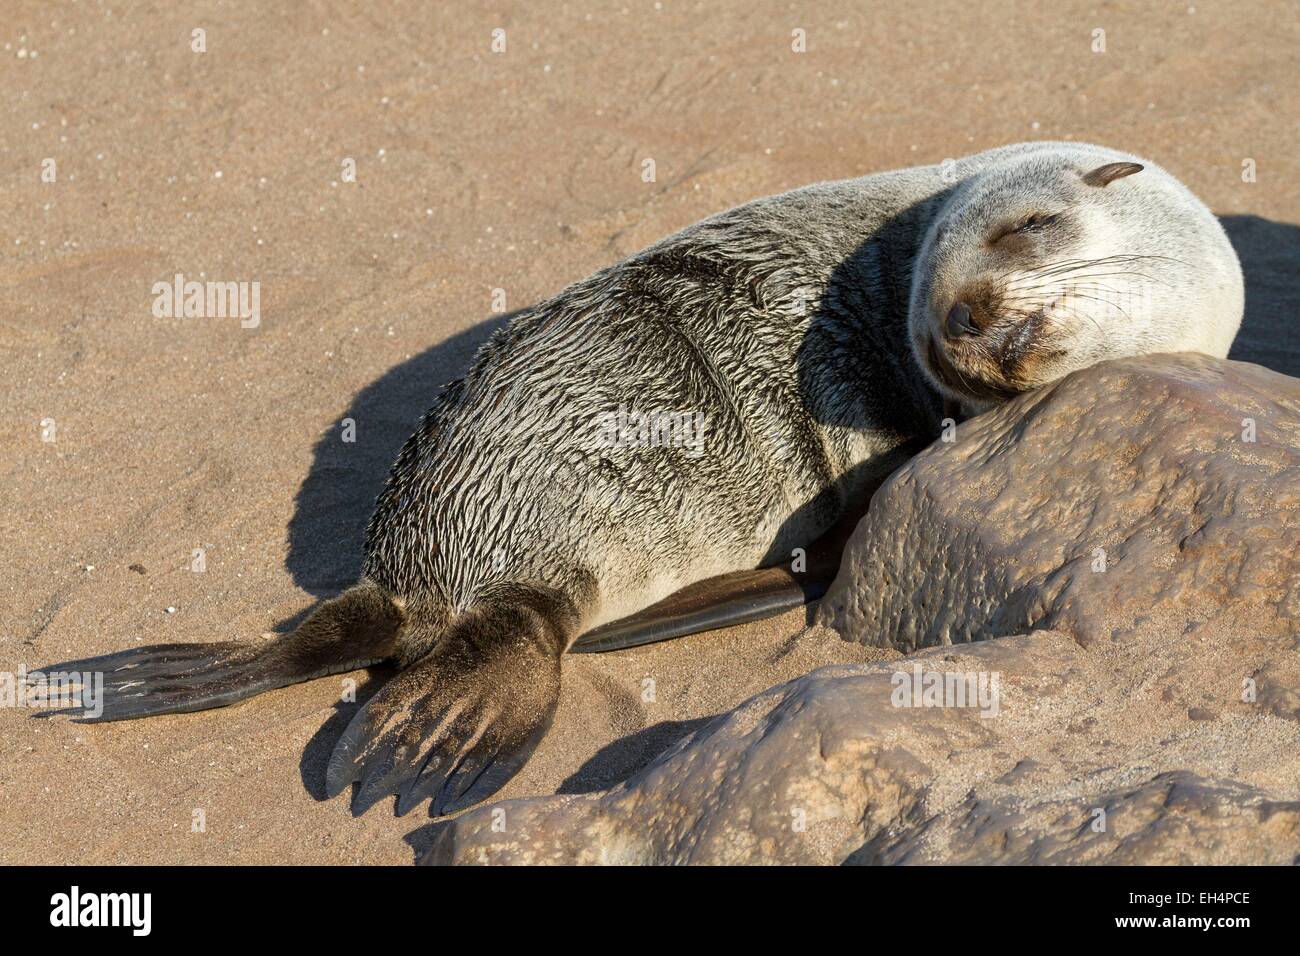 Namibia, Erongo region, Cape Cross Seal Reserve, Cape Fur Seal (Arctocephalus pusillus) Stock Photo